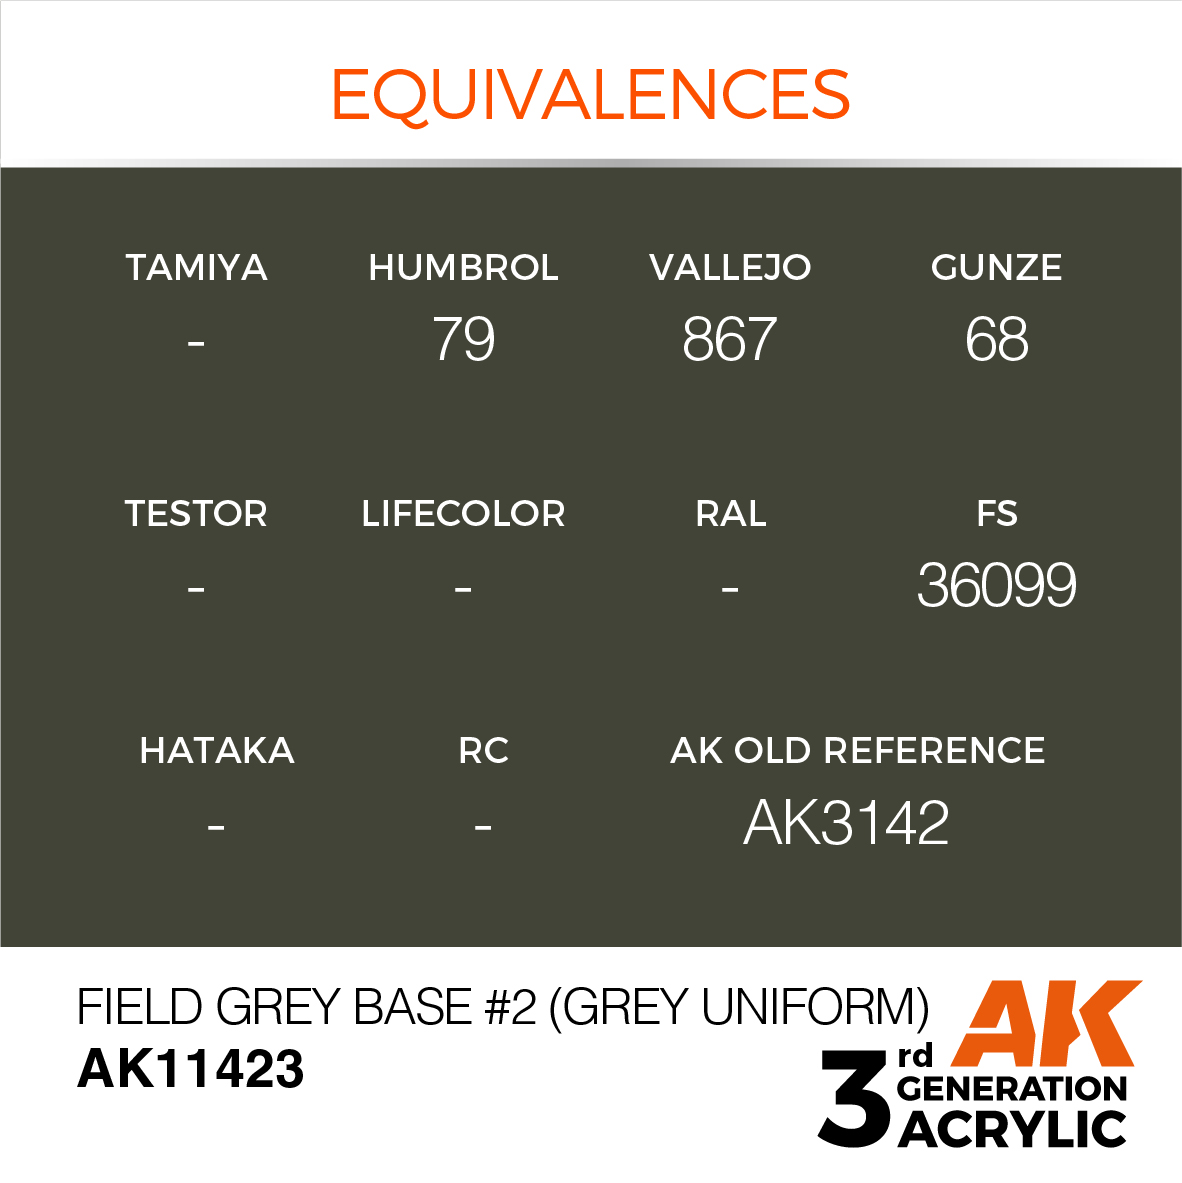 Field Grey Base #2 (Grey Uniform) – Figures